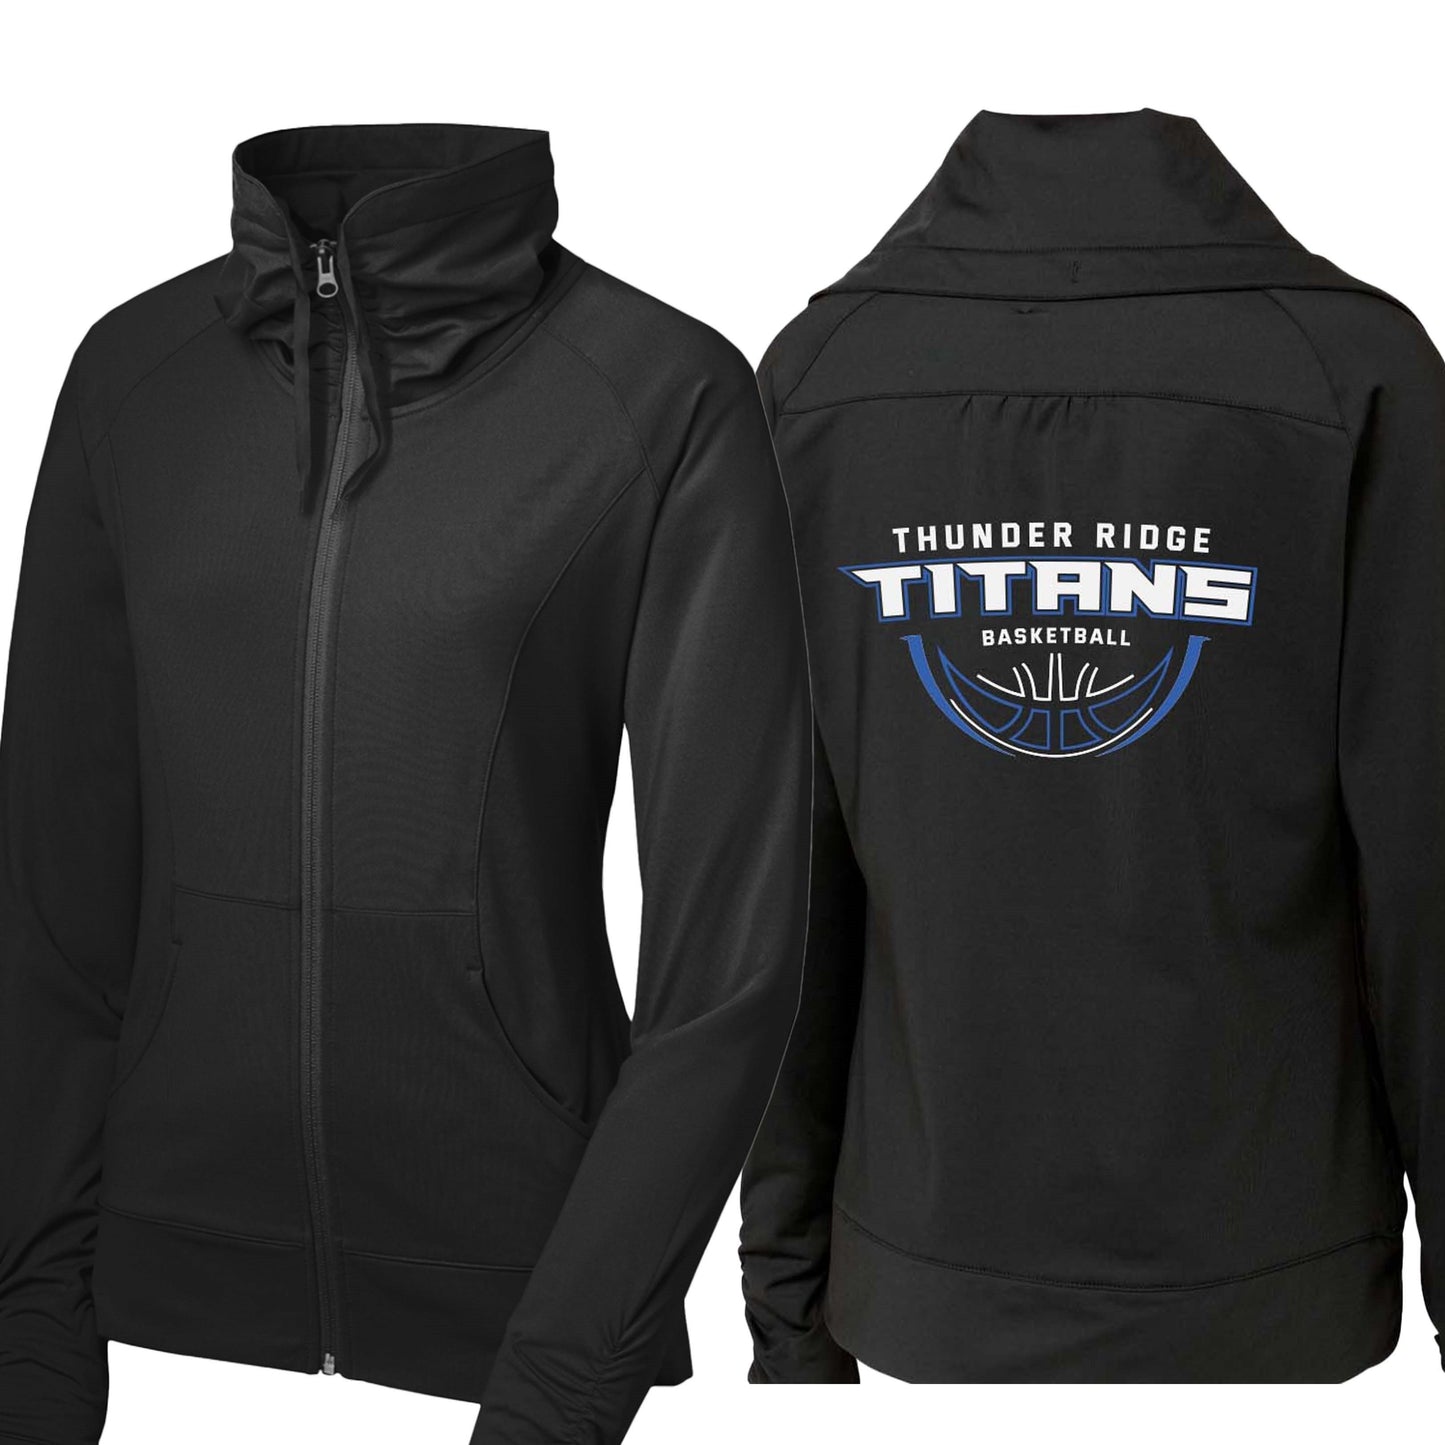 Thunder Ridge Titans Stretch Jacket with Ruching